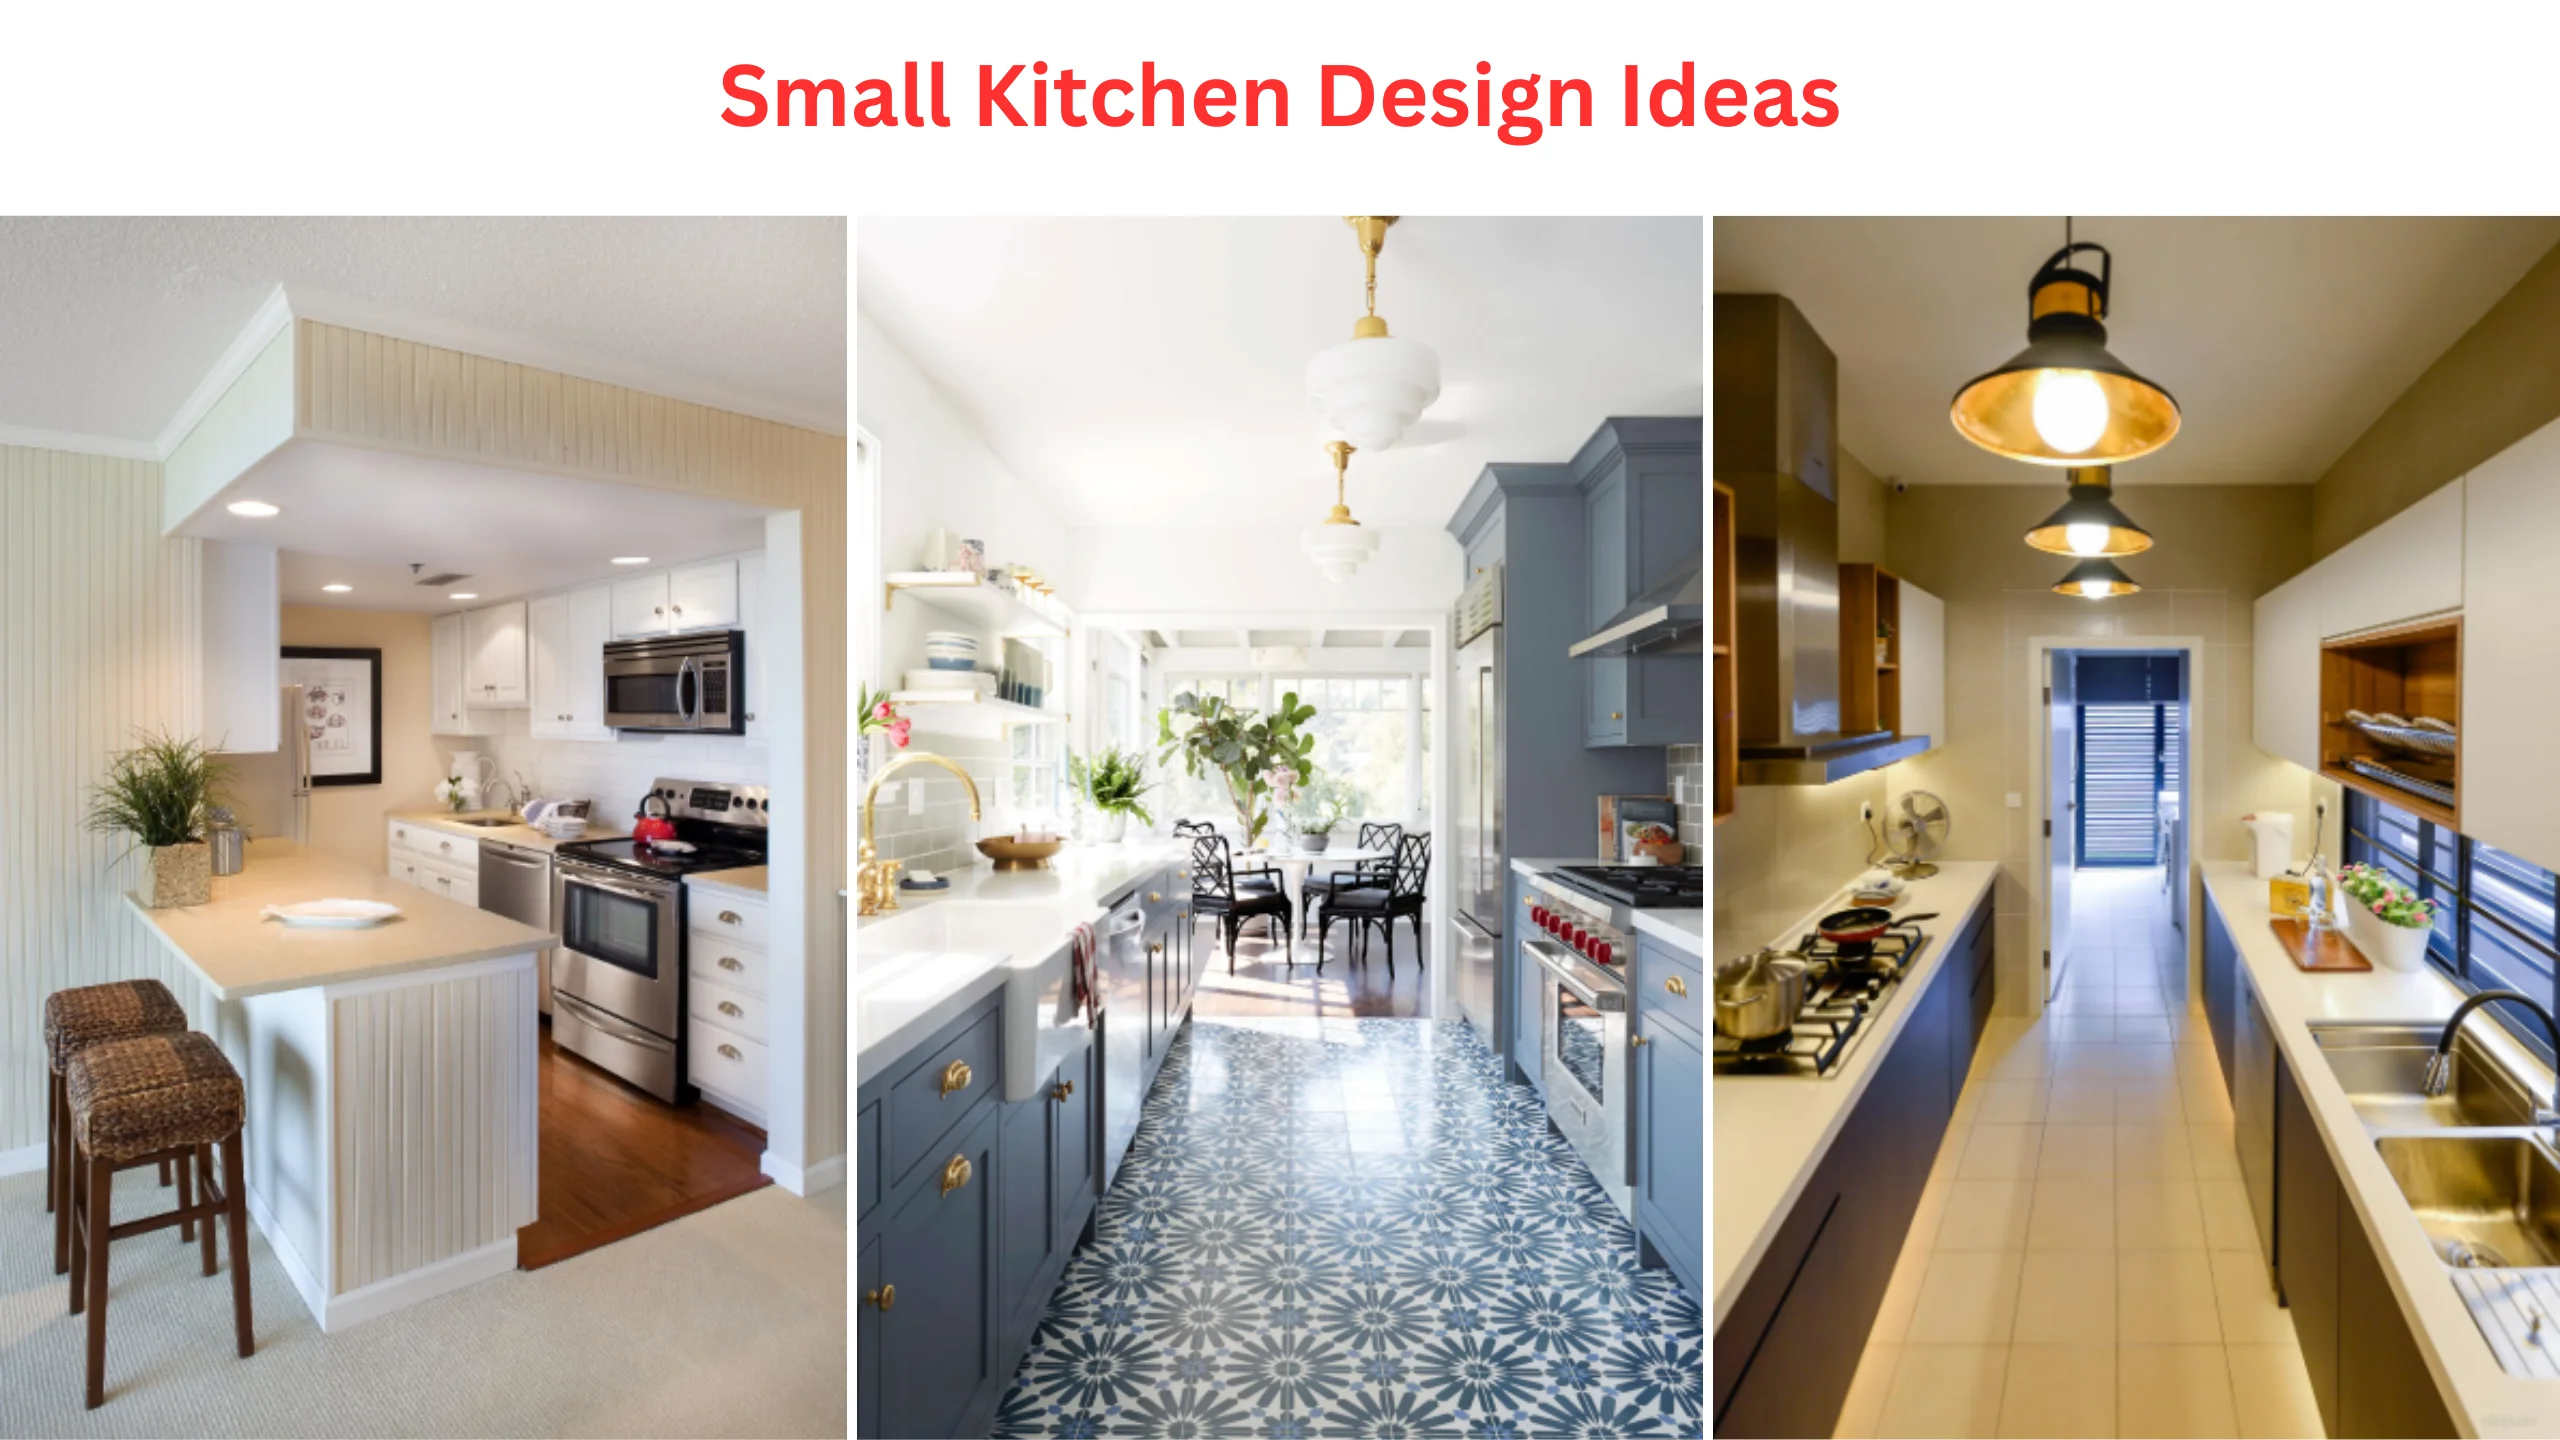 Small kitchen design ideas